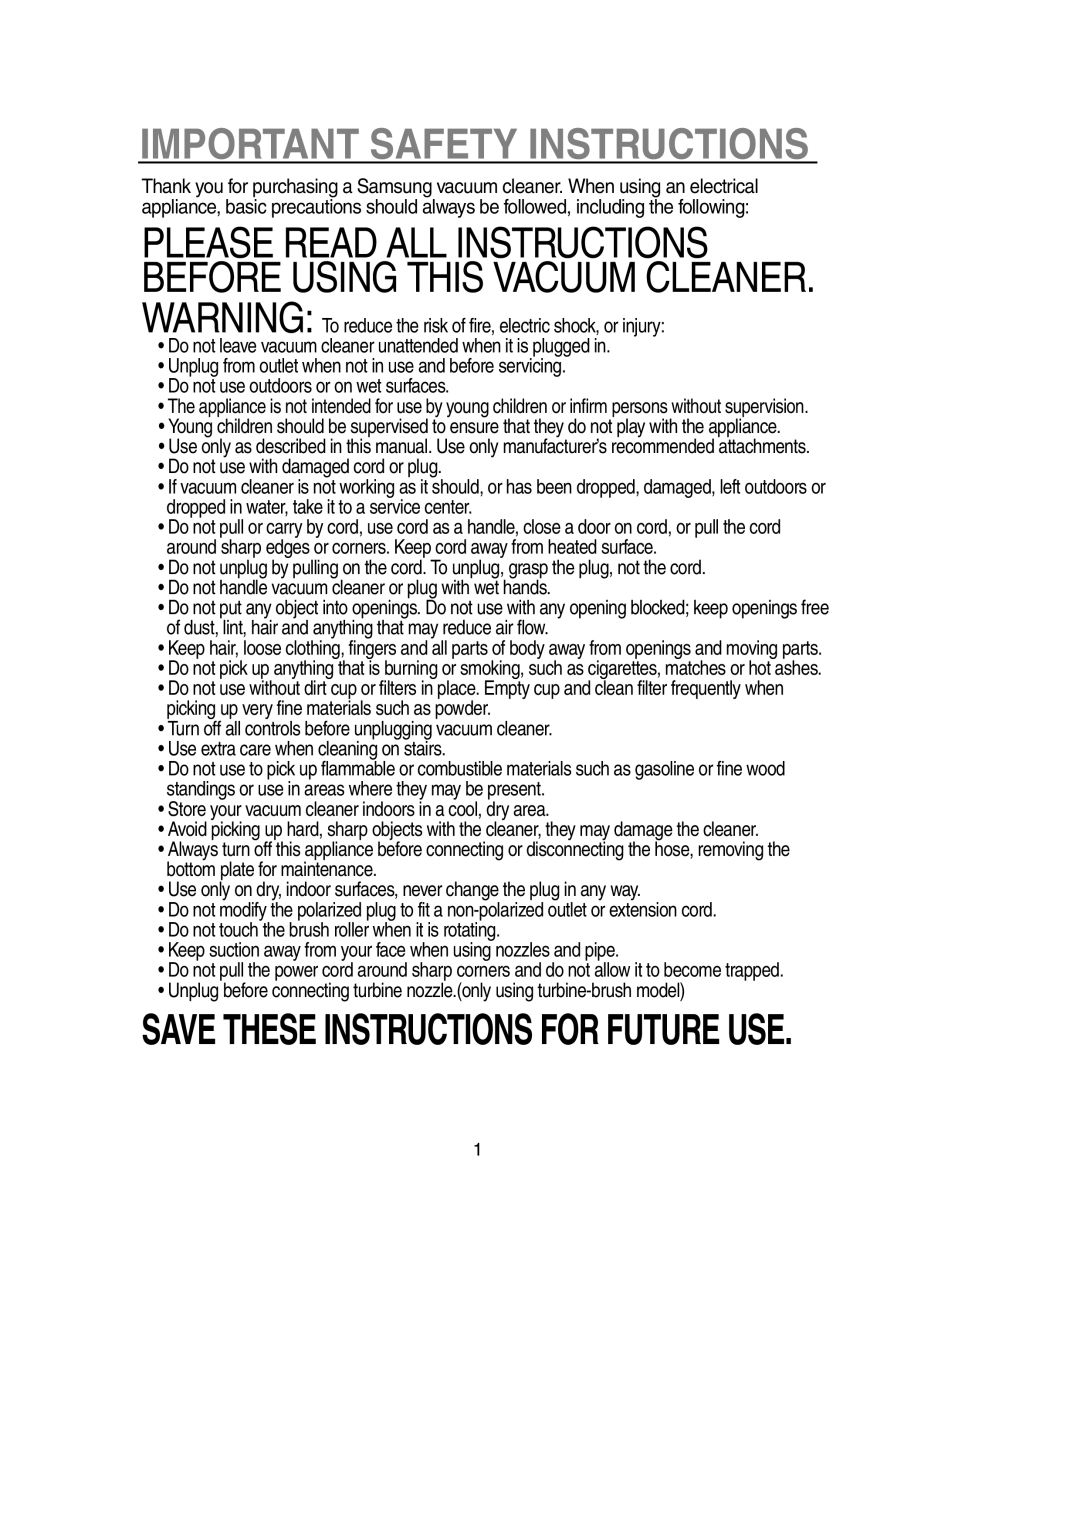 Samsung SU-2950 Series operating instructions Important Safety Instructions, Save These Instructions For Future Use 